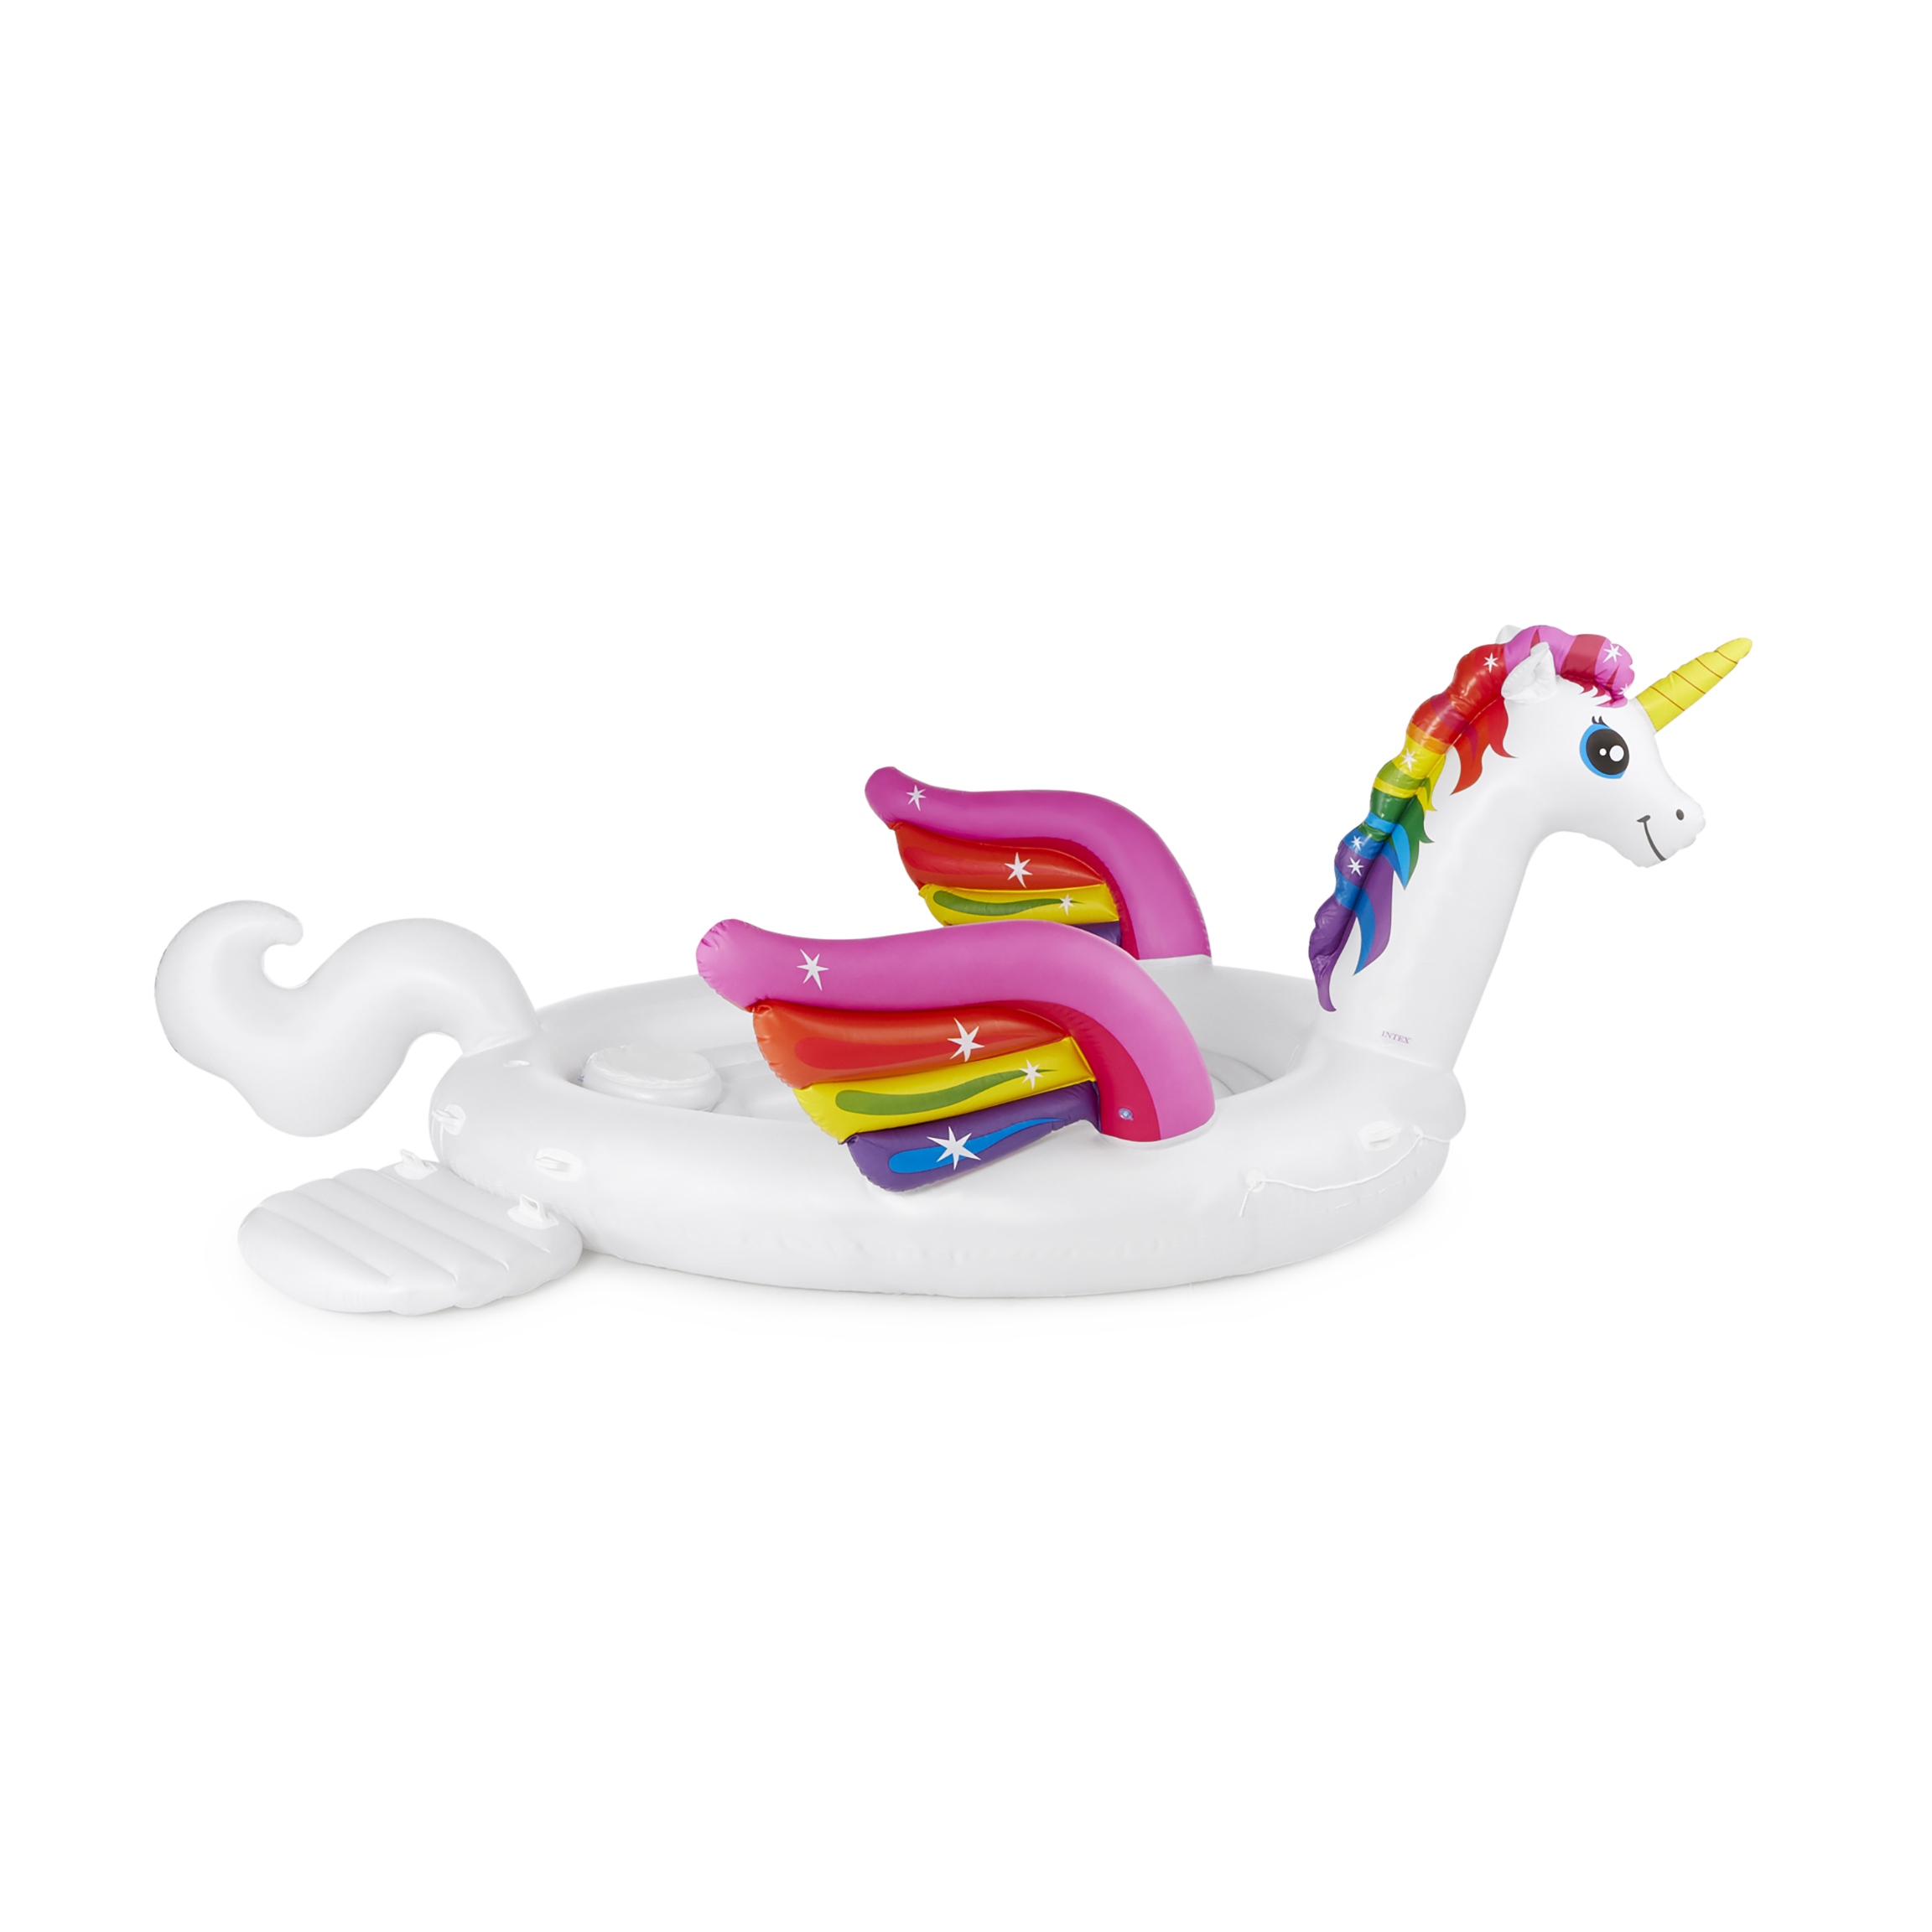 Intex 57266ep Adult Inflatable Unicorn Party Island Pool Lounger Float White 78257572663 Ebay 